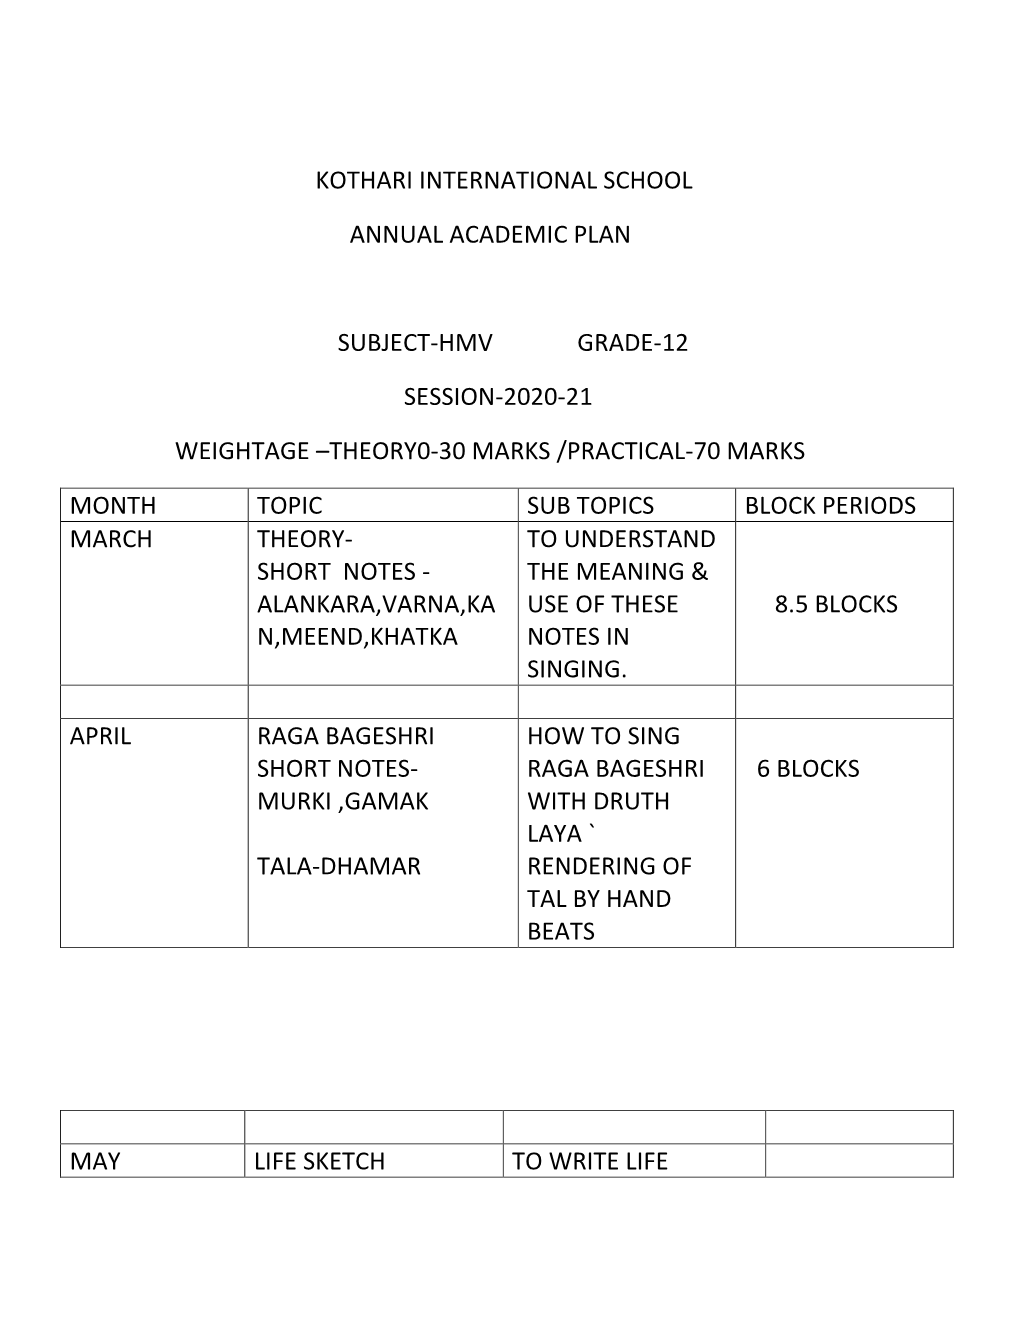 Kothari International School Annual Academic Plan Subject-Hmv Grade-12 Session-2020-21 Weightage –Theory0-30 Marks